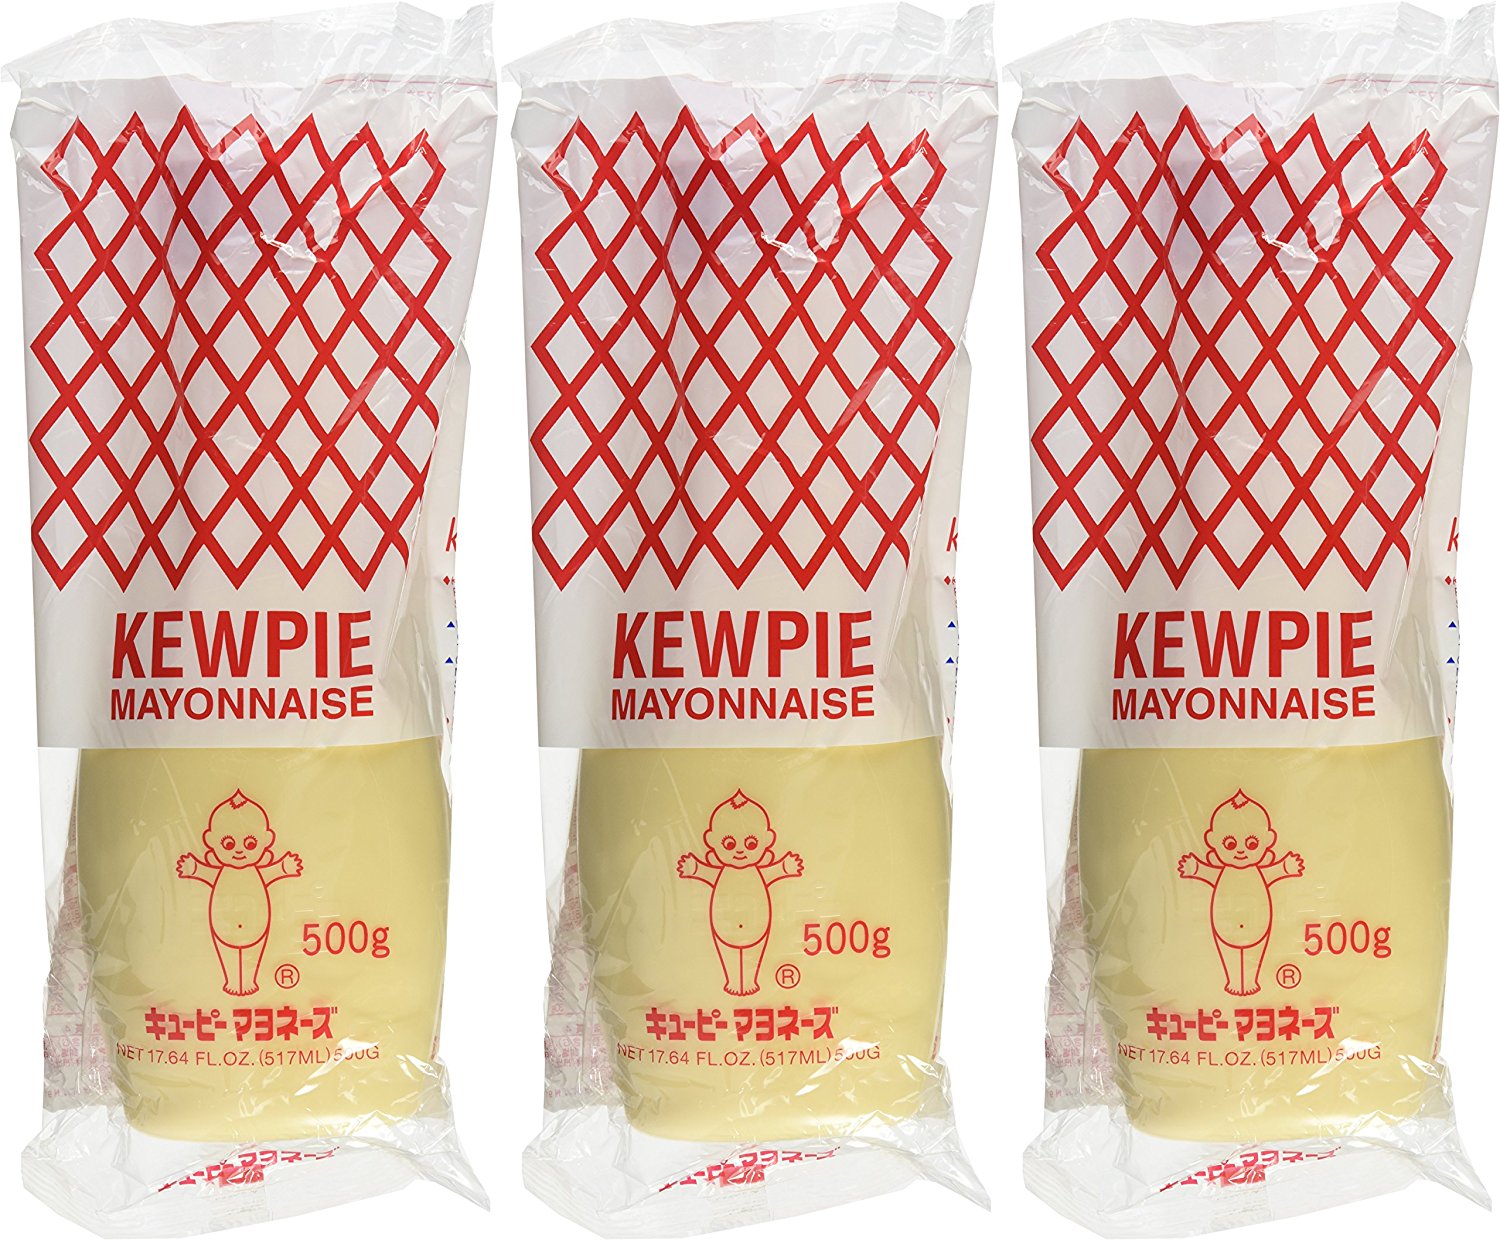 Popular International Condiments: Kewpie Mayo